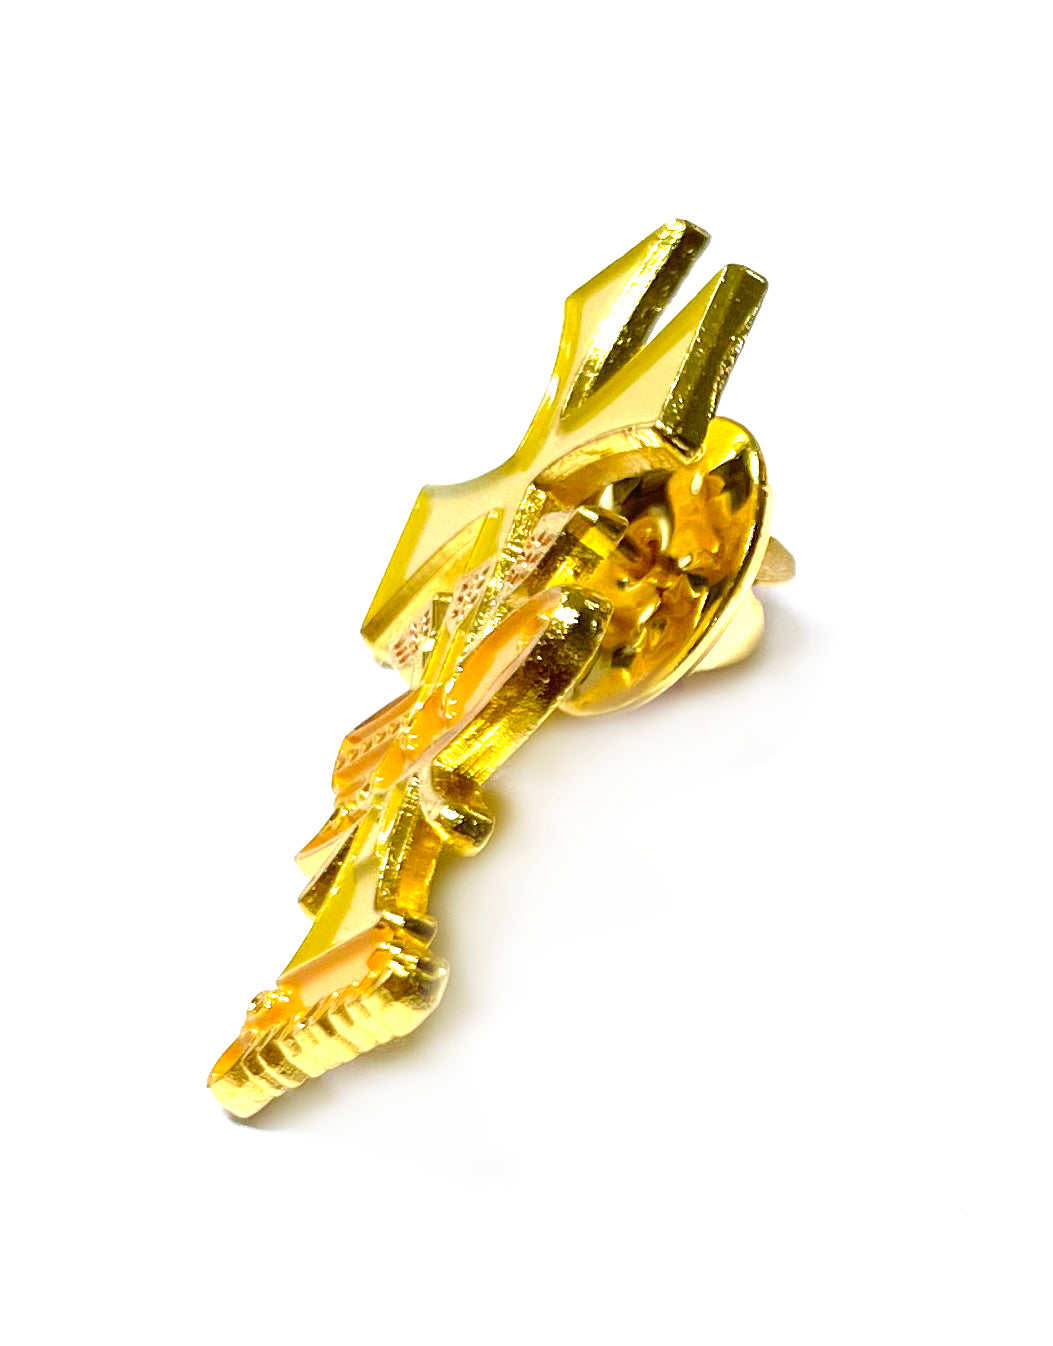 Emmaus lapel pin special for retreats made of golden metal- Pin de Emaús especial para retiros hecho en metal dorado